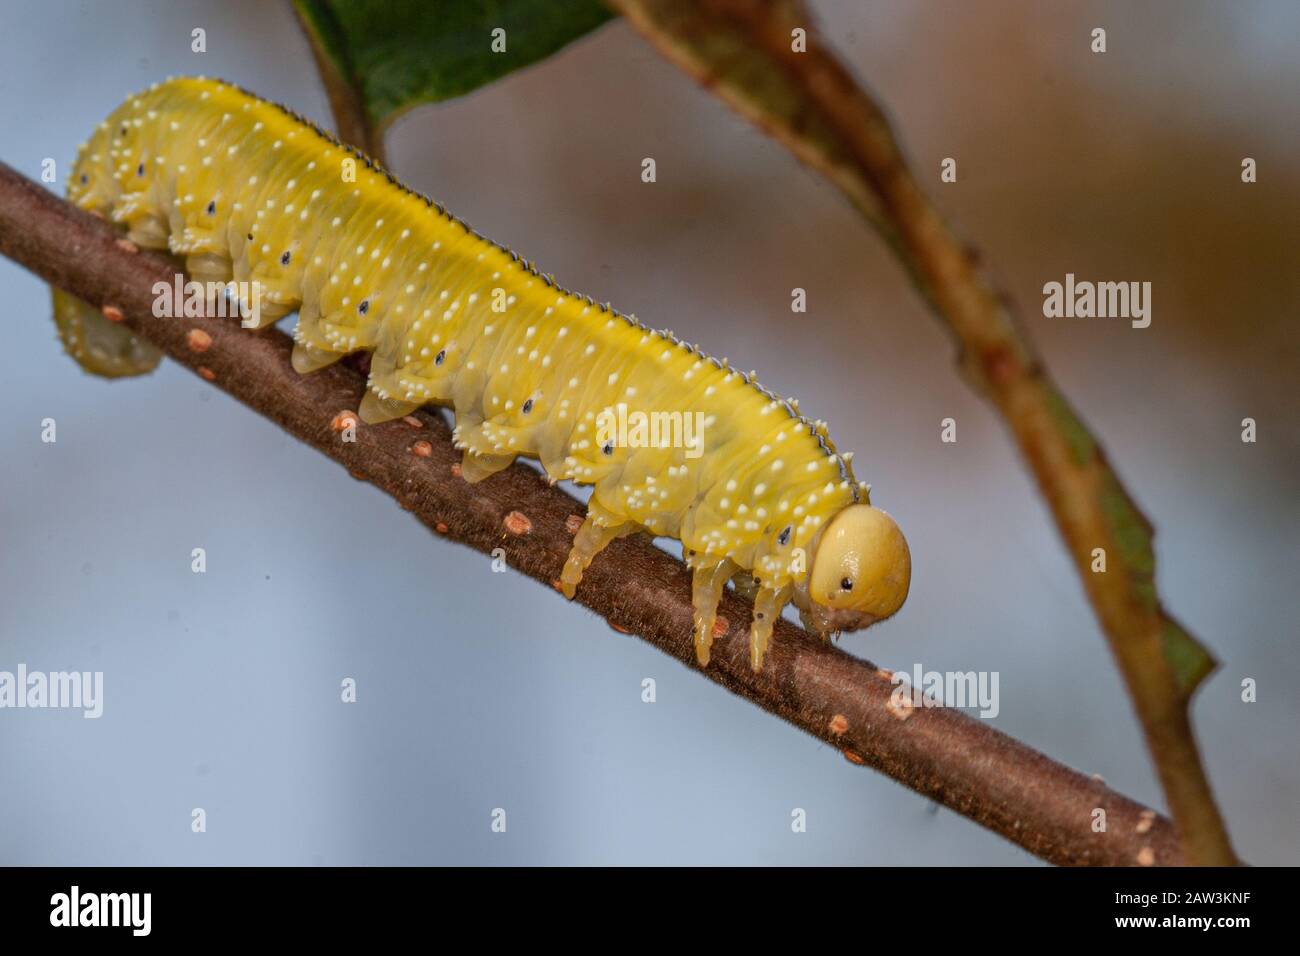 Elm sawfly larvae - Cimbex americana, Stock Photo